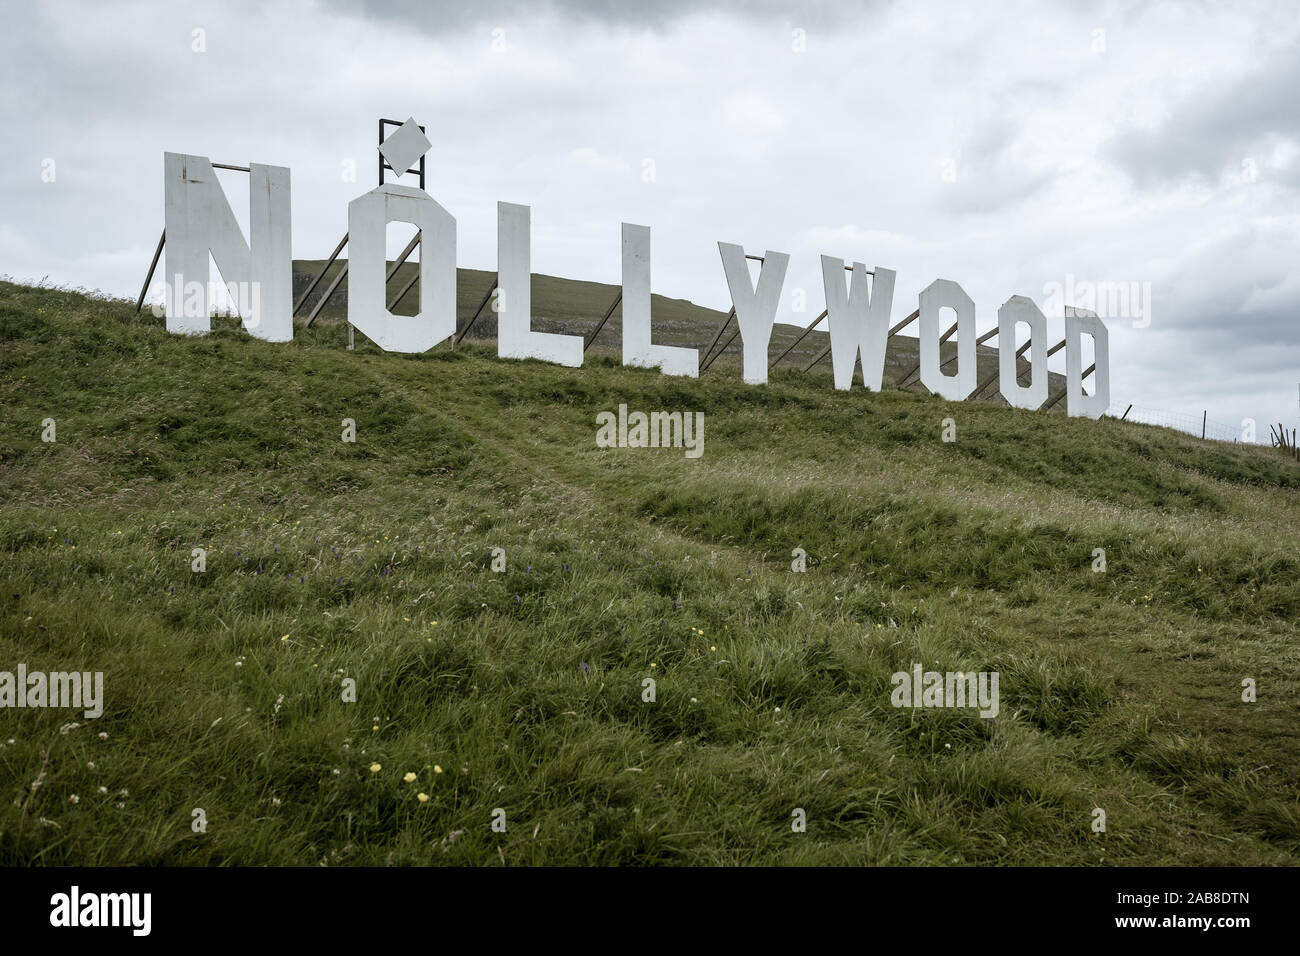 Nóllywood im Dorf Nólsoy auf der Insel Nolsoy, auf der Insel Faröer, Dänemark, Europa. Stockfoto